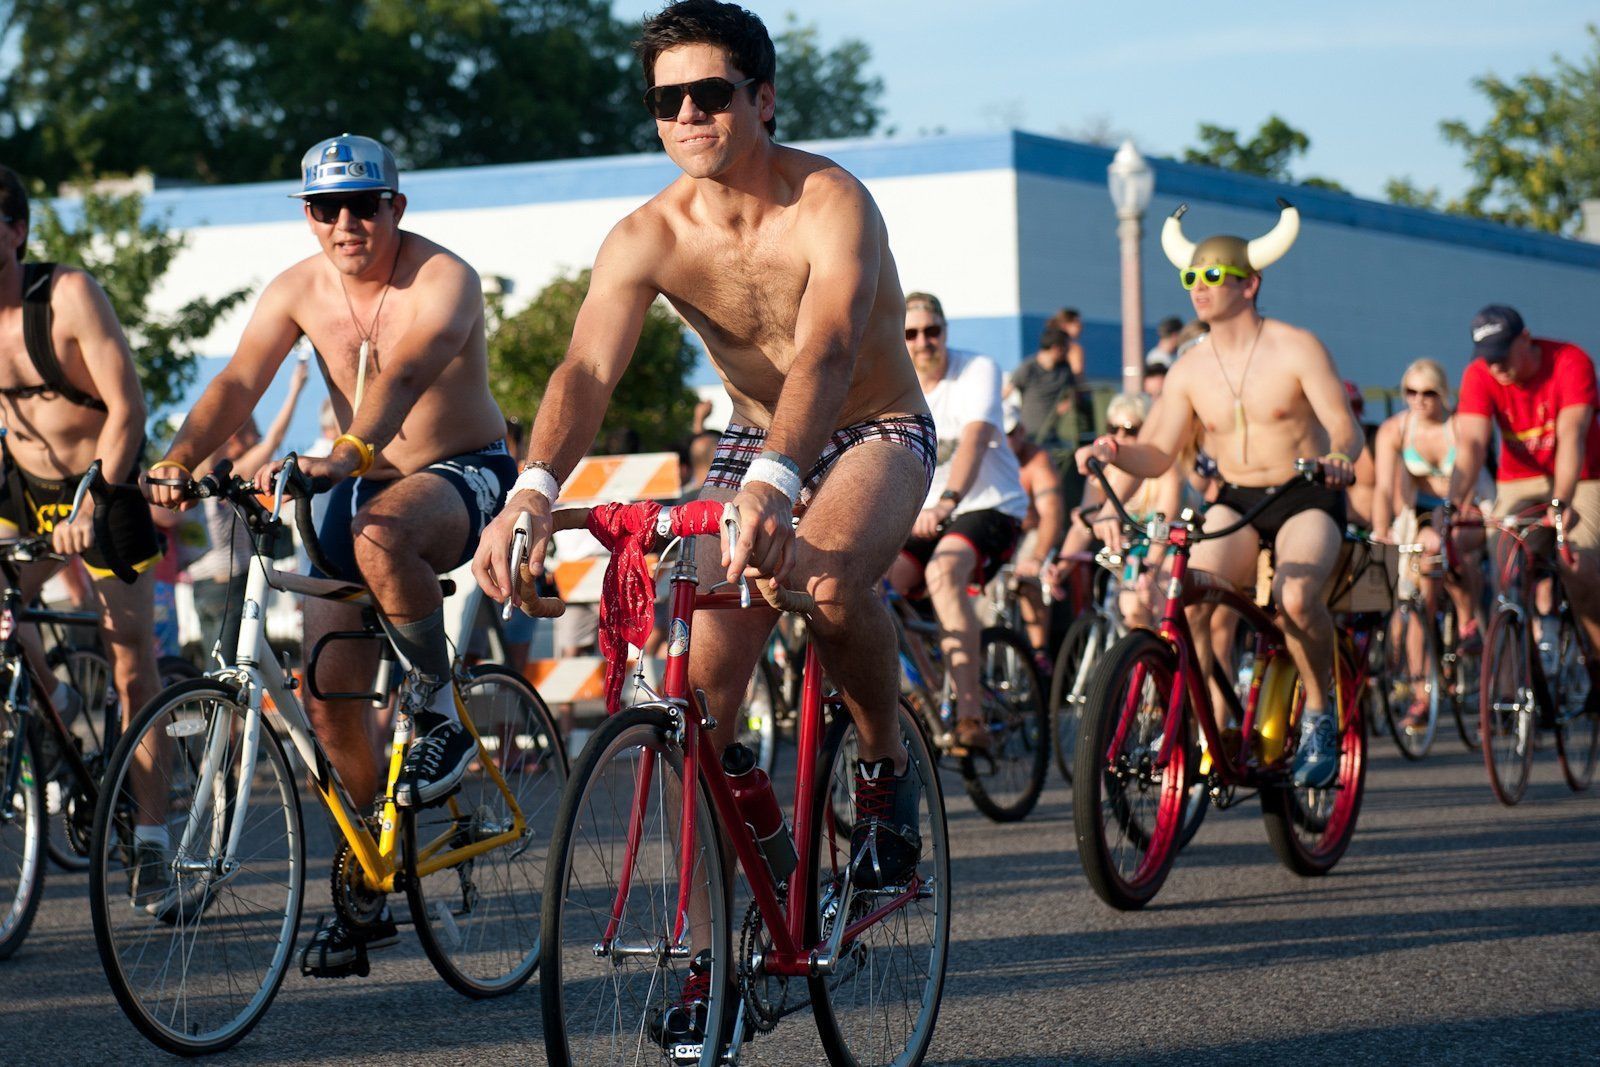 St. Louis for World Naked Bike Ride. naked bike racing. 